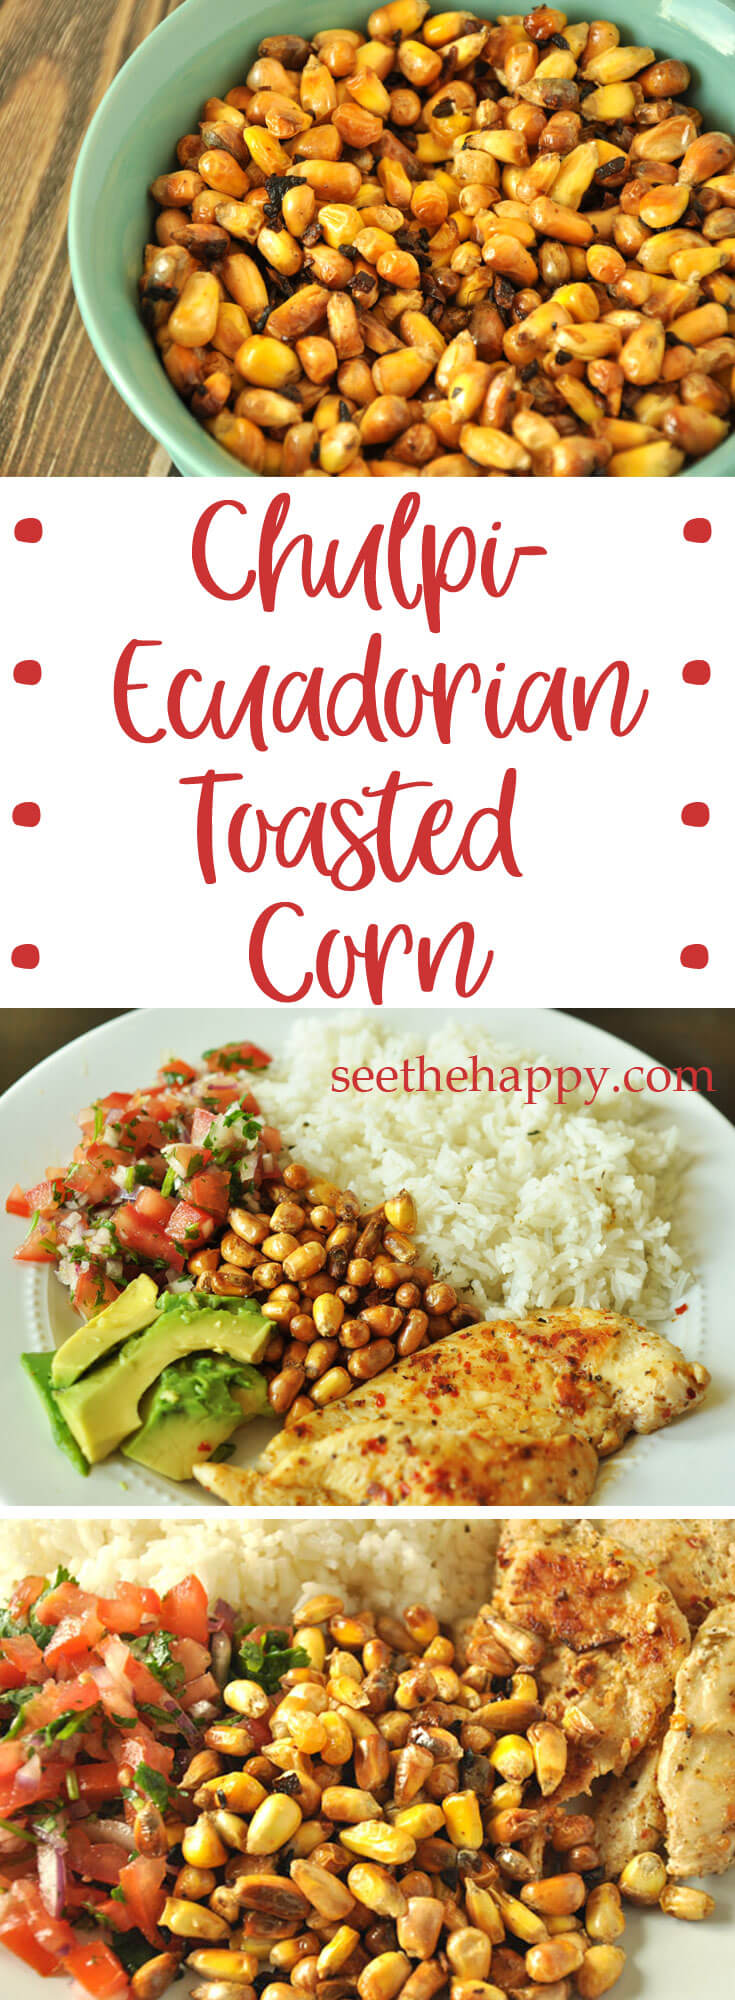 Chulpi-Ecuadorian Toasted Corn